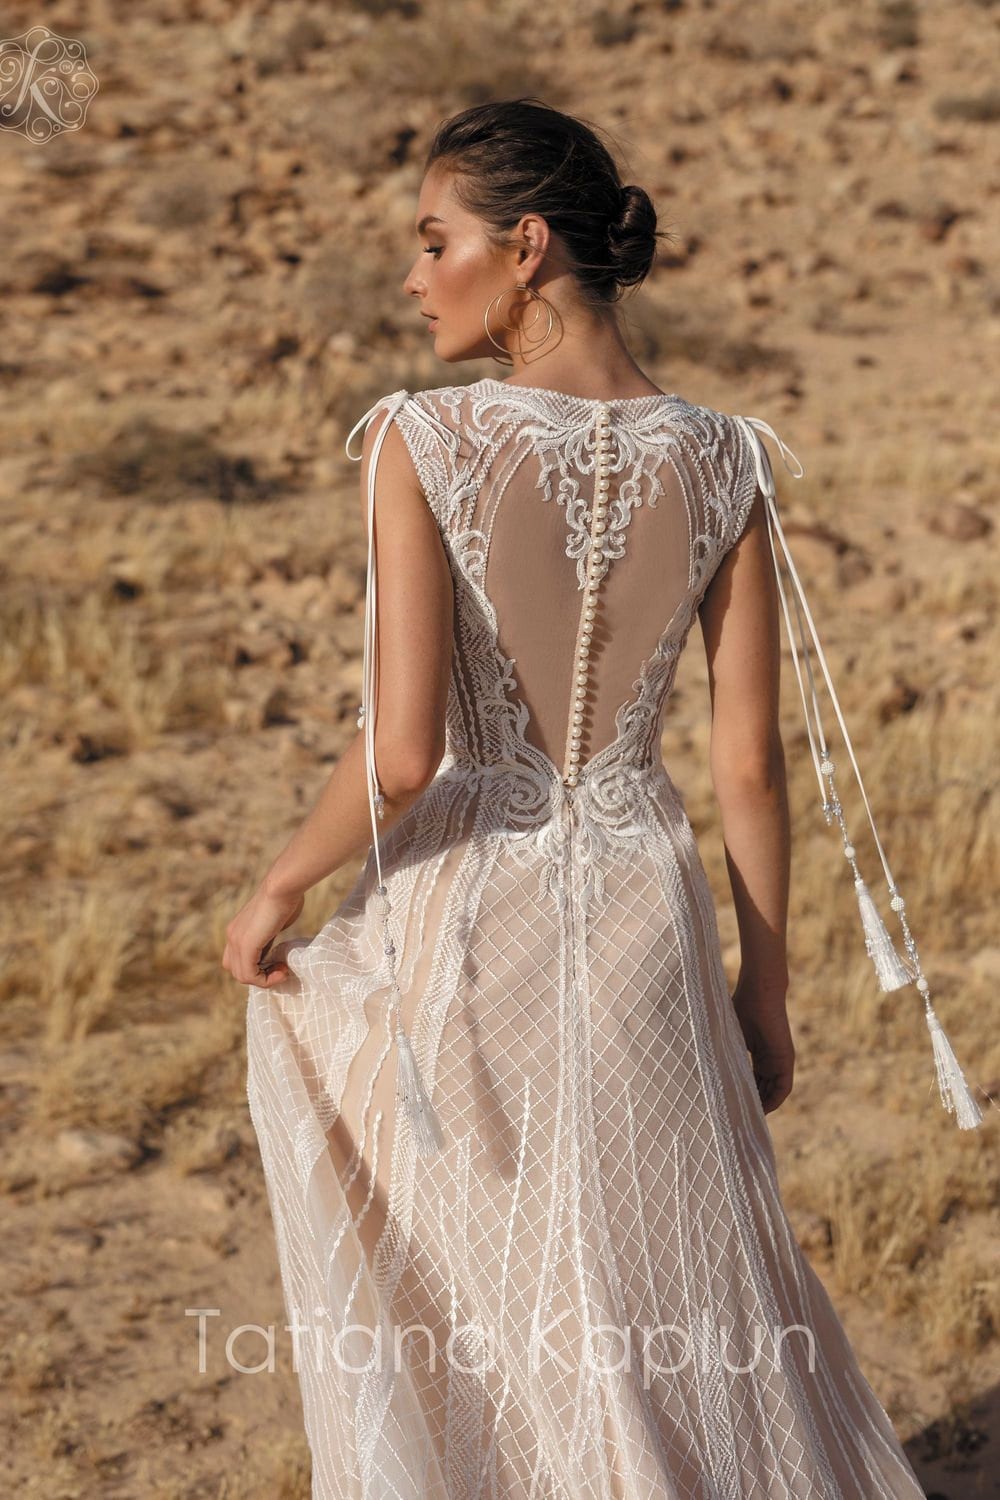 Boho ALine Ivory Lace Wedding Dress Tassel Sheer Illusion Bodice Sleeveless High Neckline Wedding Dress Buttons boho Style Bridal Gown